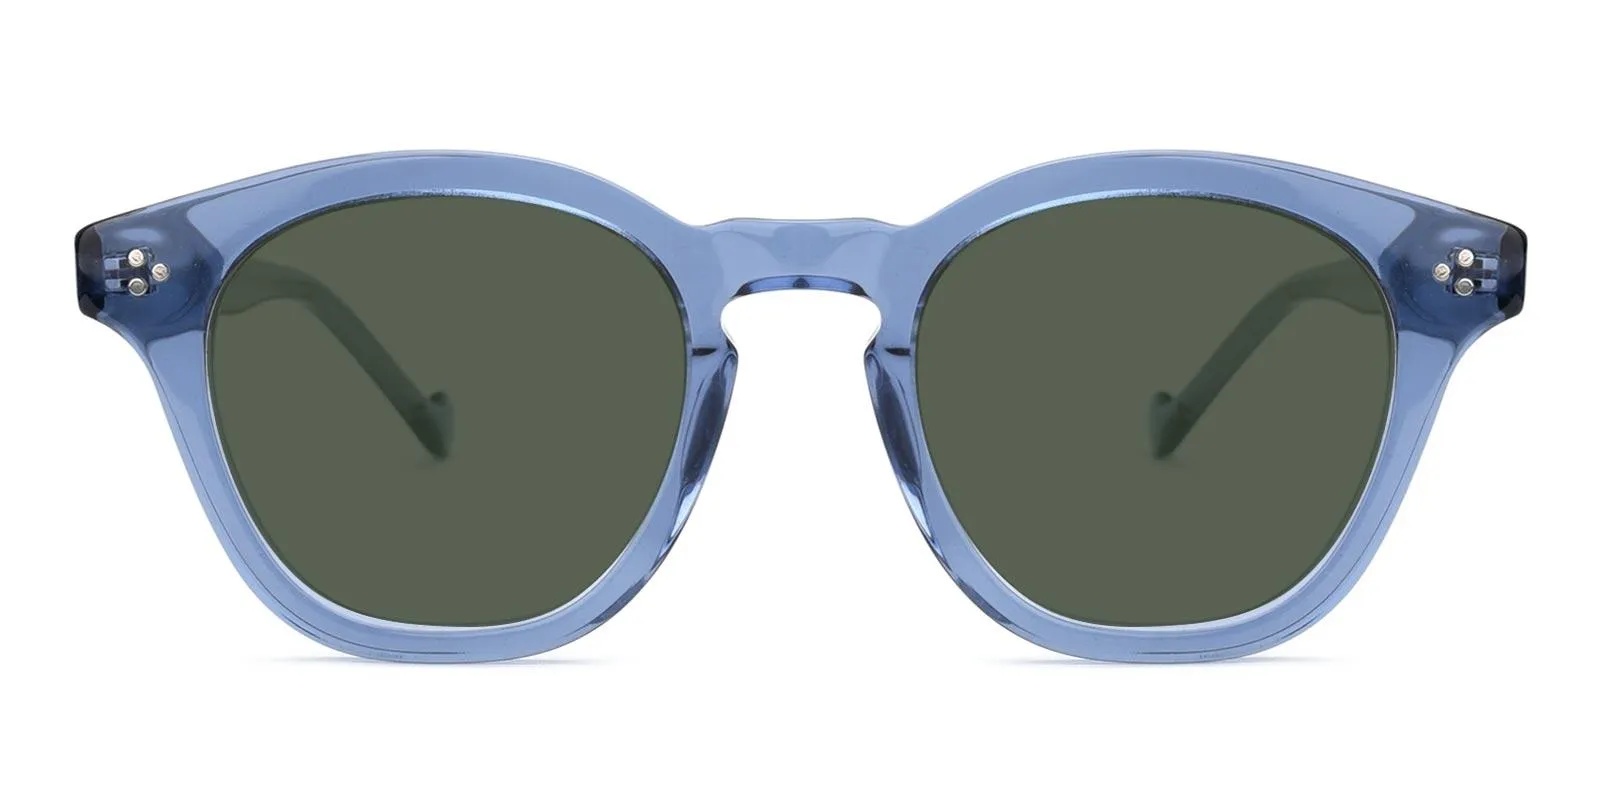 Unibling Allison Blue Sunglasses